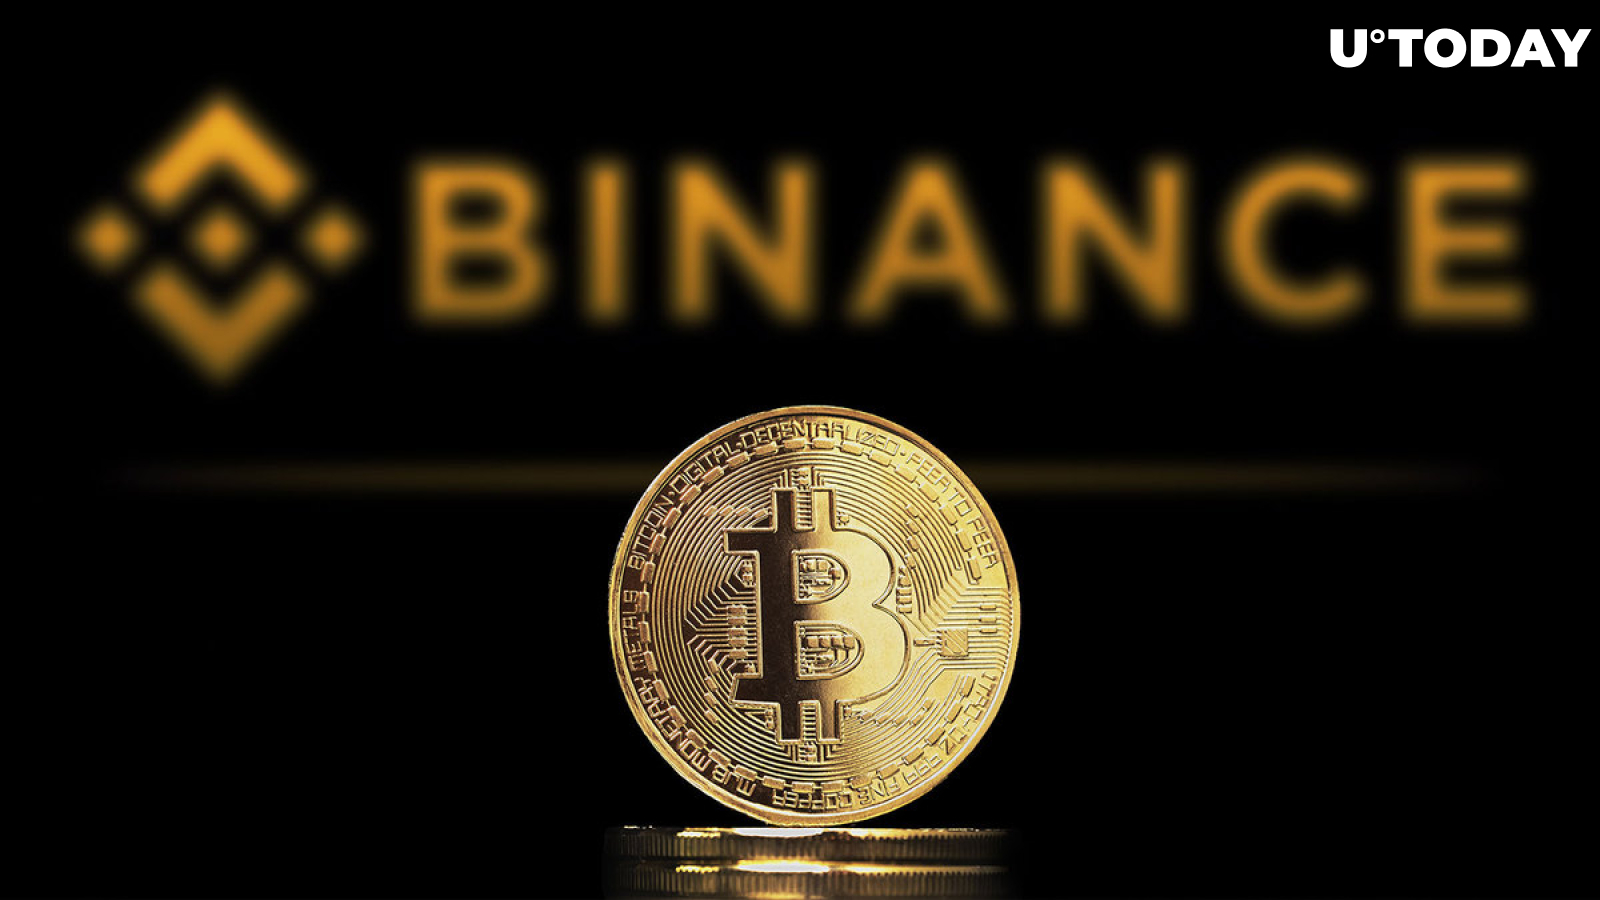 Bitcoin Worth $2 Billion Transferred from Binance on Market Dip